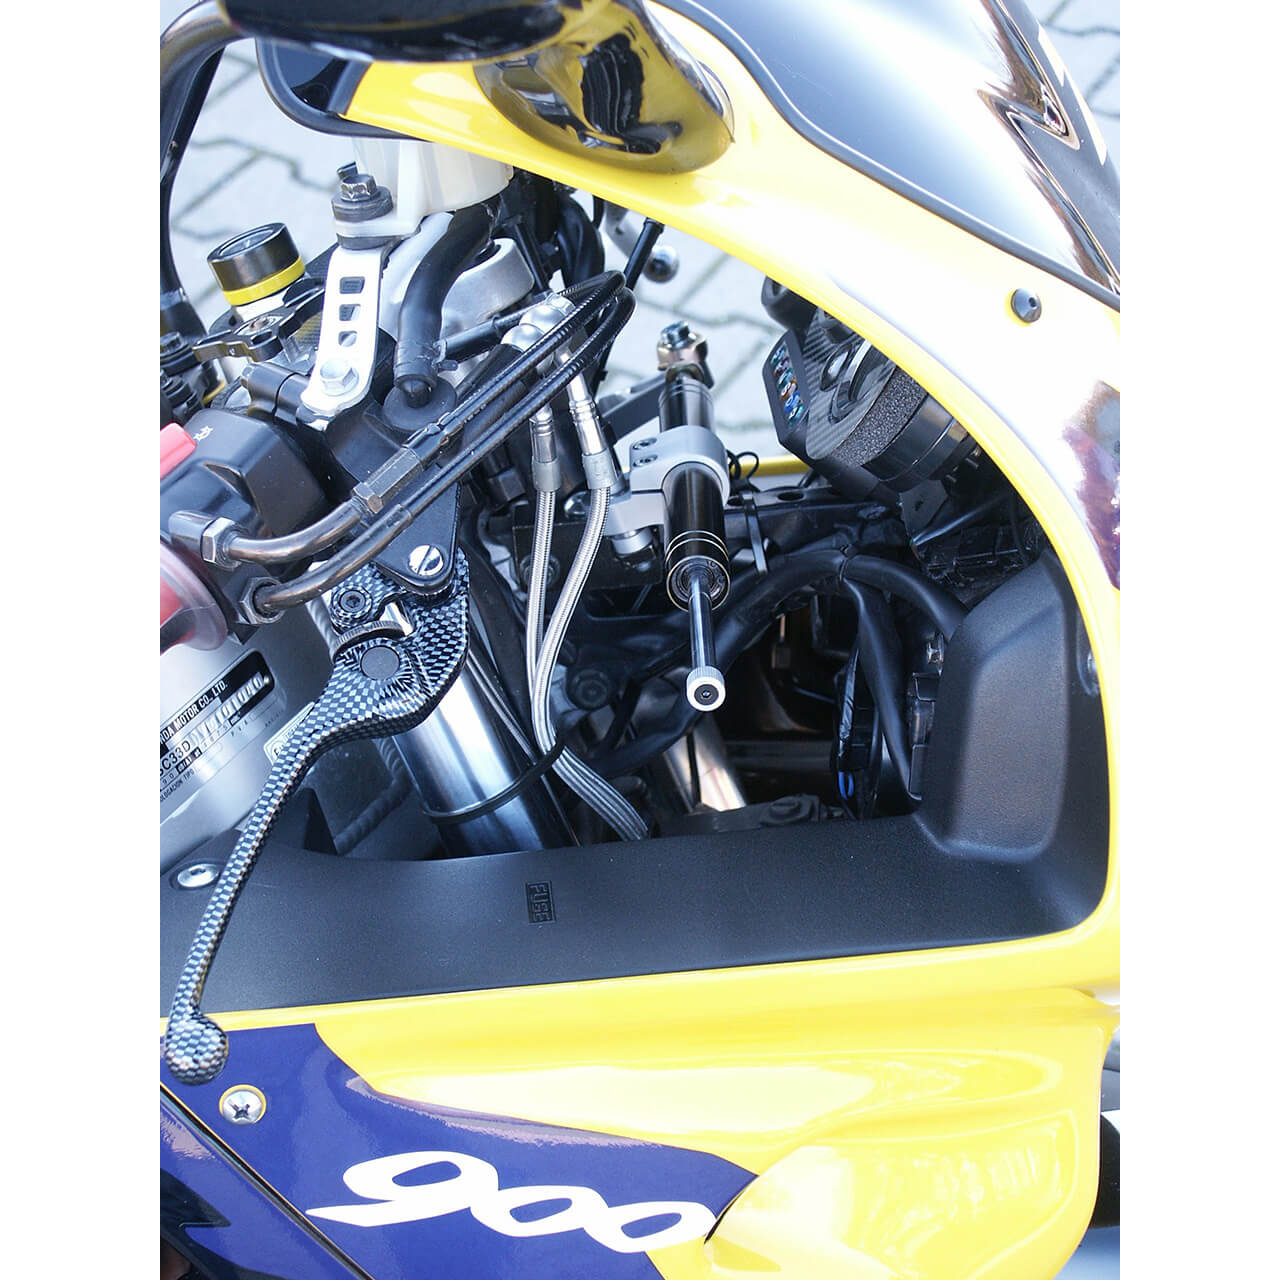 lsl Steering damper kit HONDA CBR 900RR (92-97), titanium